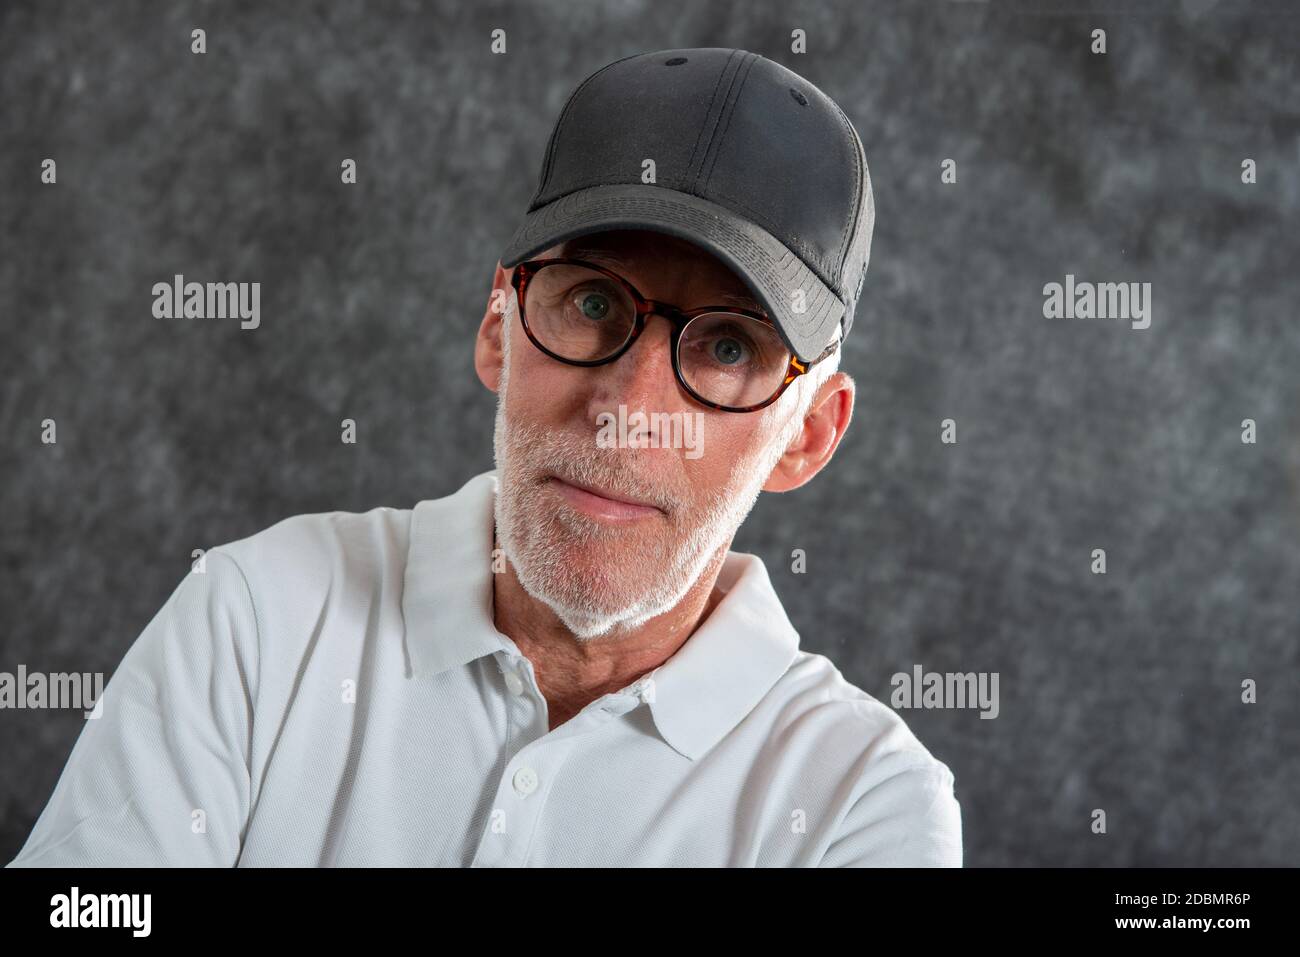 a sixty year old man wearing a baseball cap Stock Photo